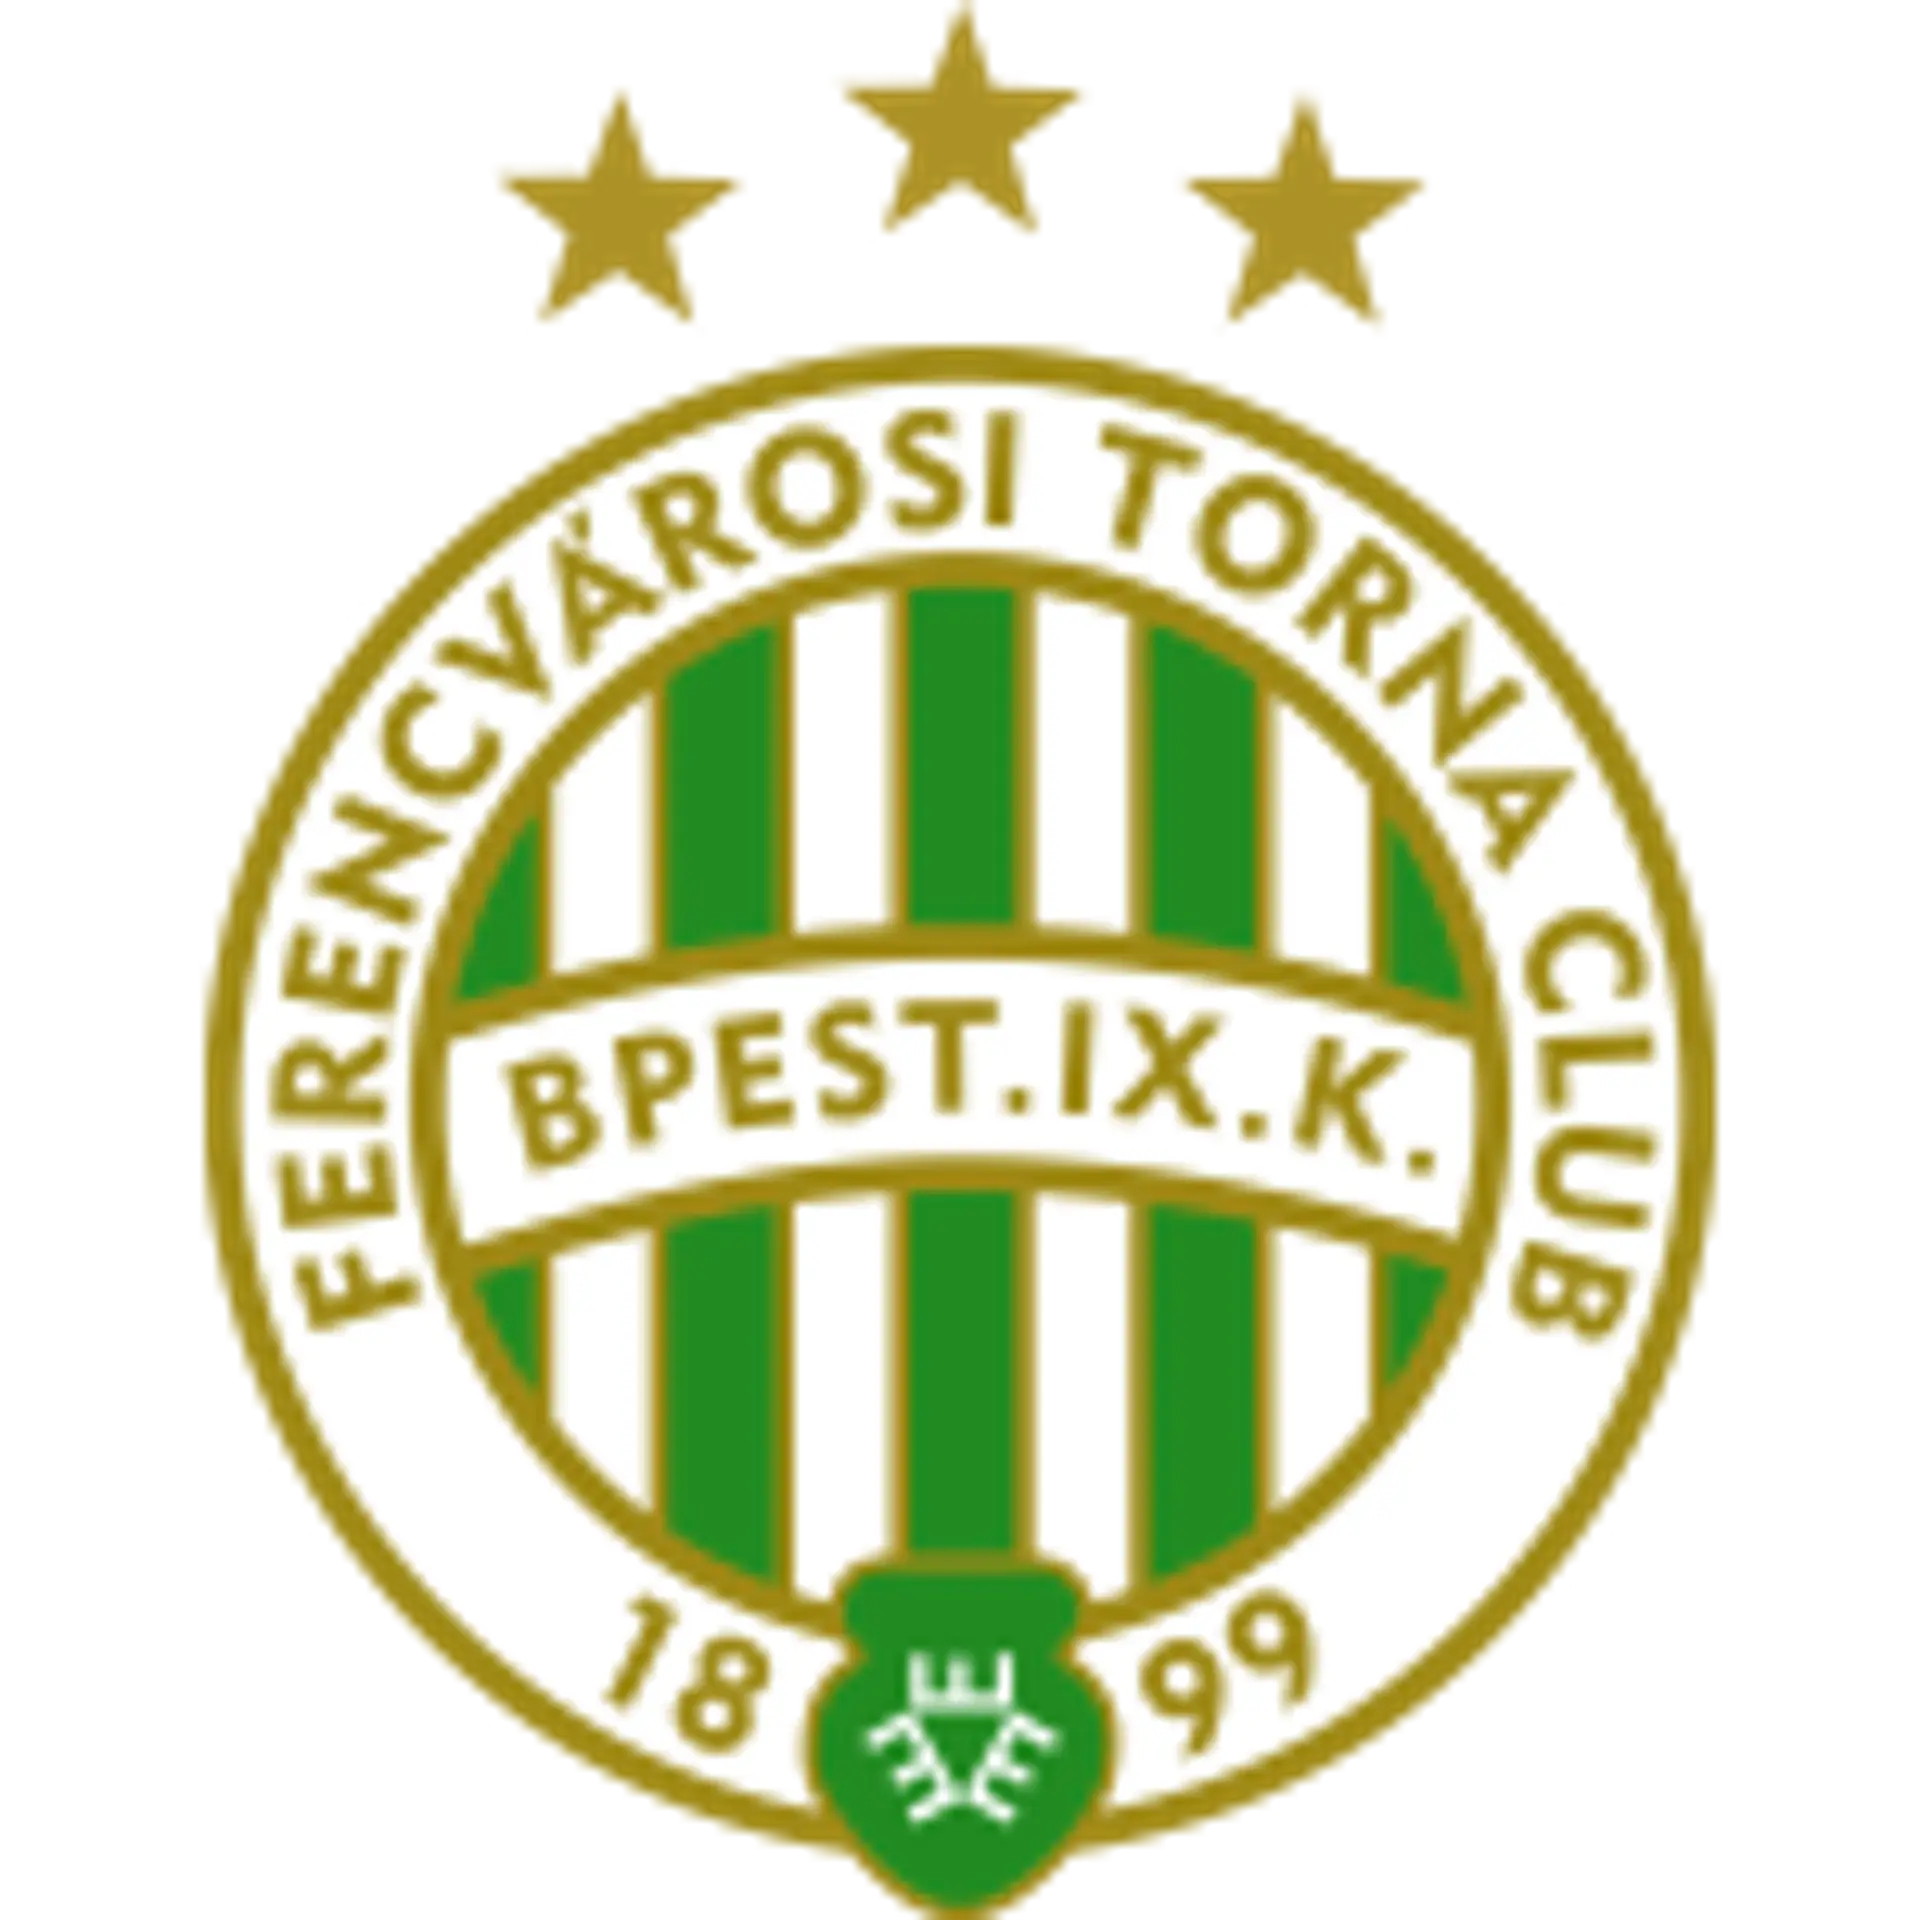 Ferencvarosi TC vs Kecskemeti TE: Live Score, Stream and H2H results  2/12/2015. Preview match Ferencvarosi TC vs Kecskemeti TE, team, start  time.